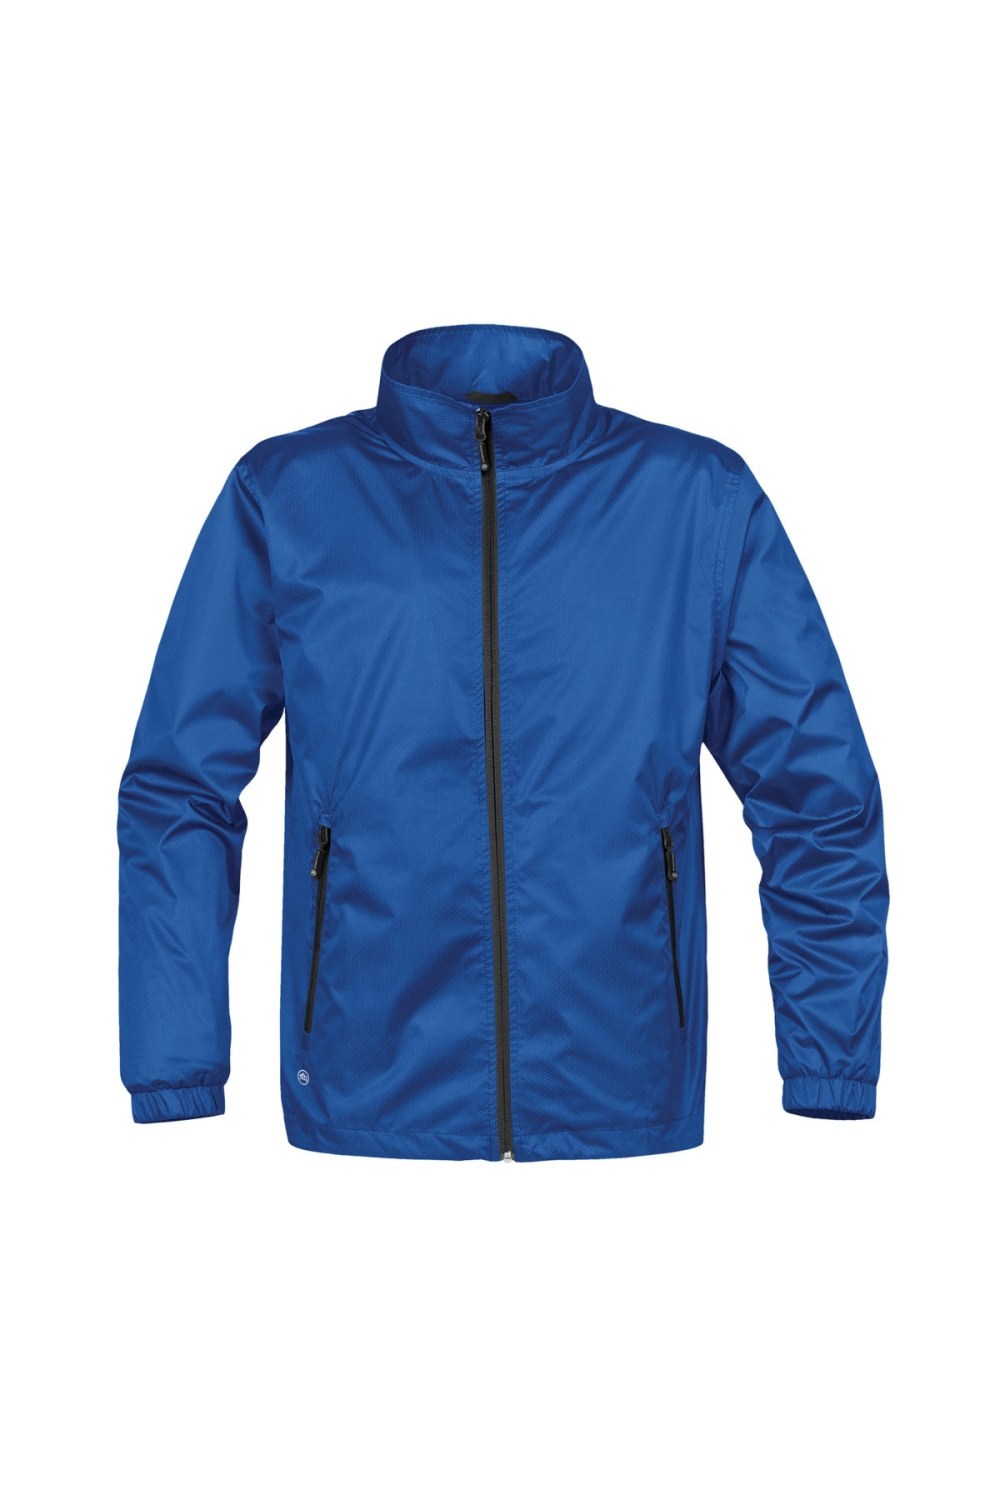 Axis Mens Lightweight Waterproof Shell Jacket -